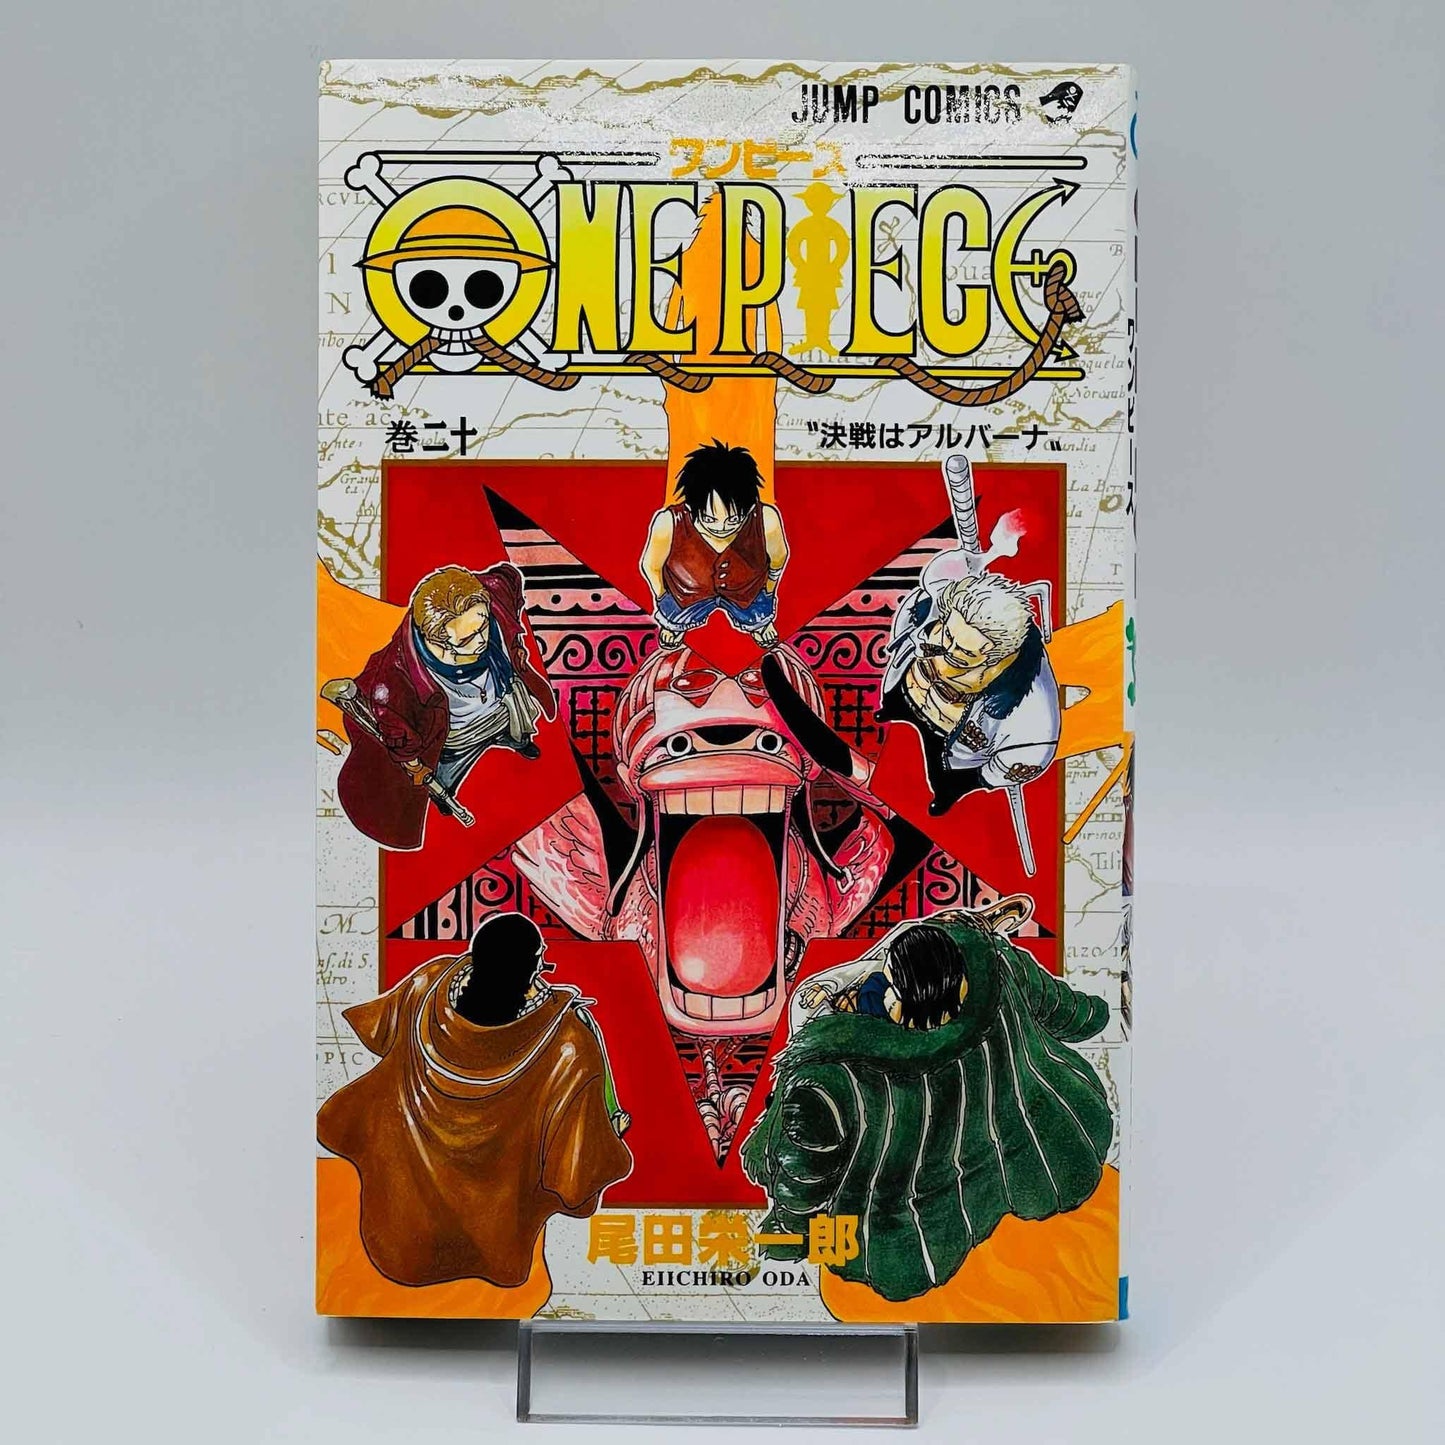 One Piece - Volume 20 - 1stPrint.net - 1st First Print Edition Manga Store - M-OP-20-001